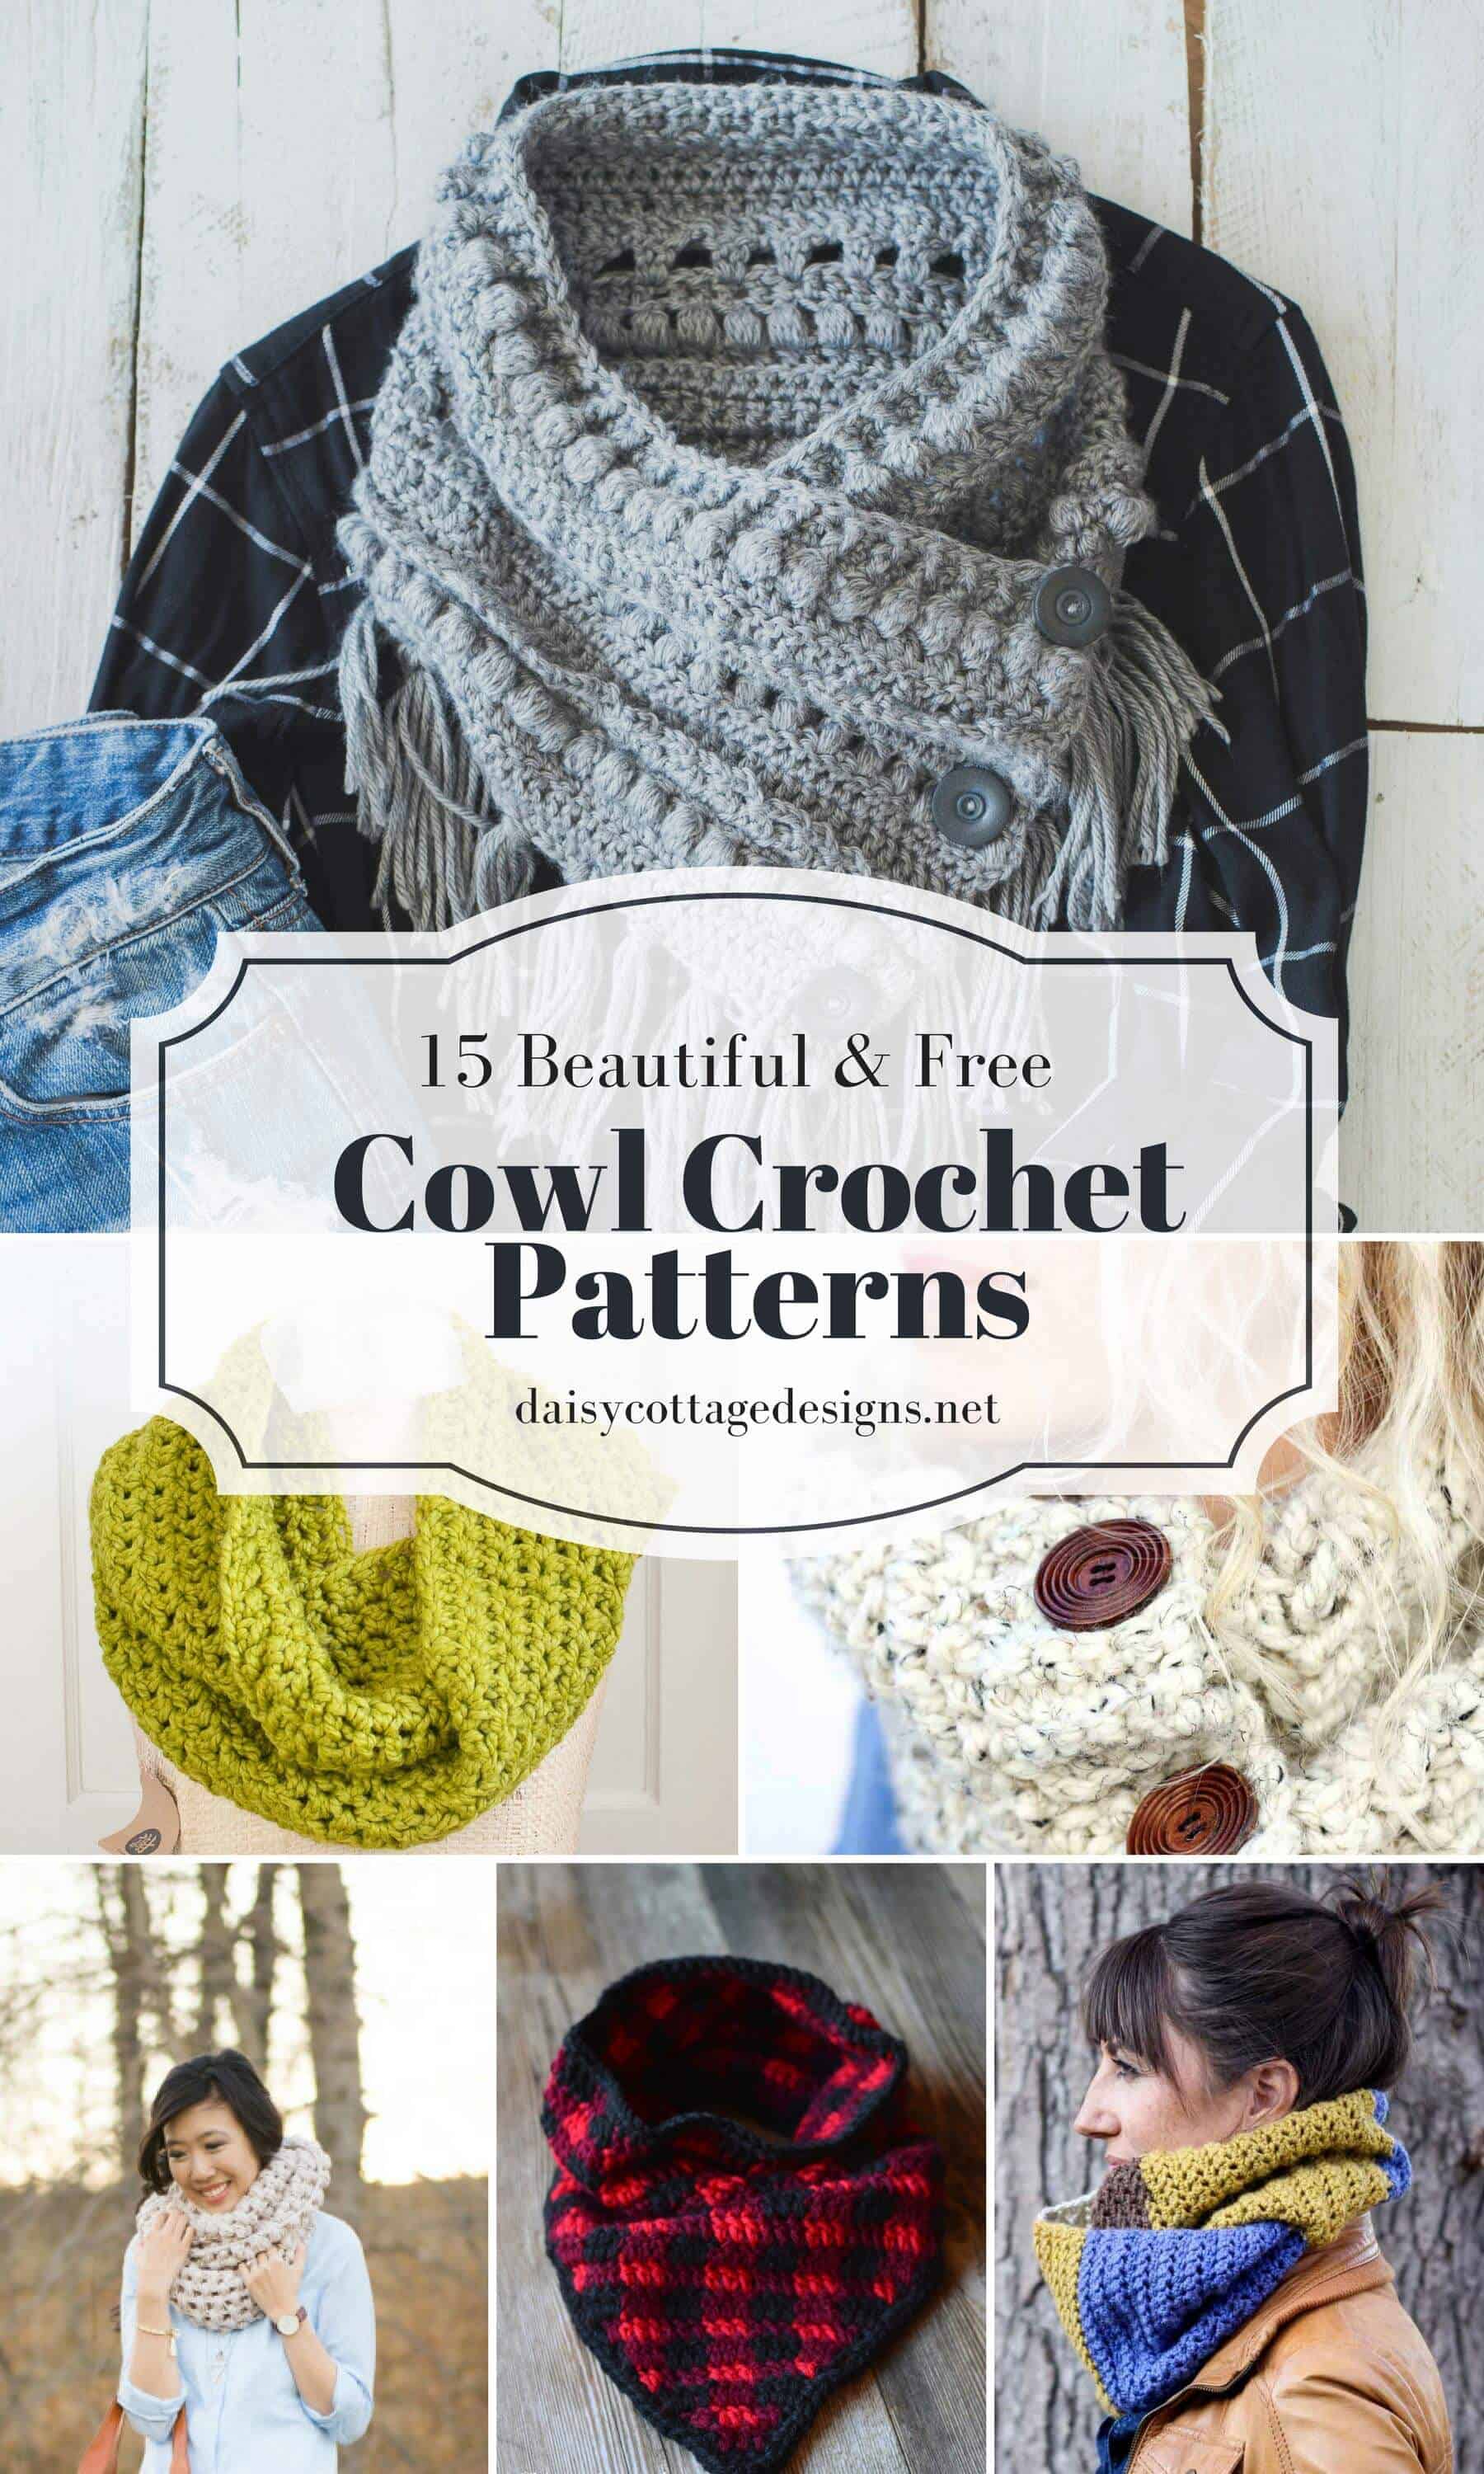 15 free cowl crochet patterns. These make wonderful gifts and fashion statements. 